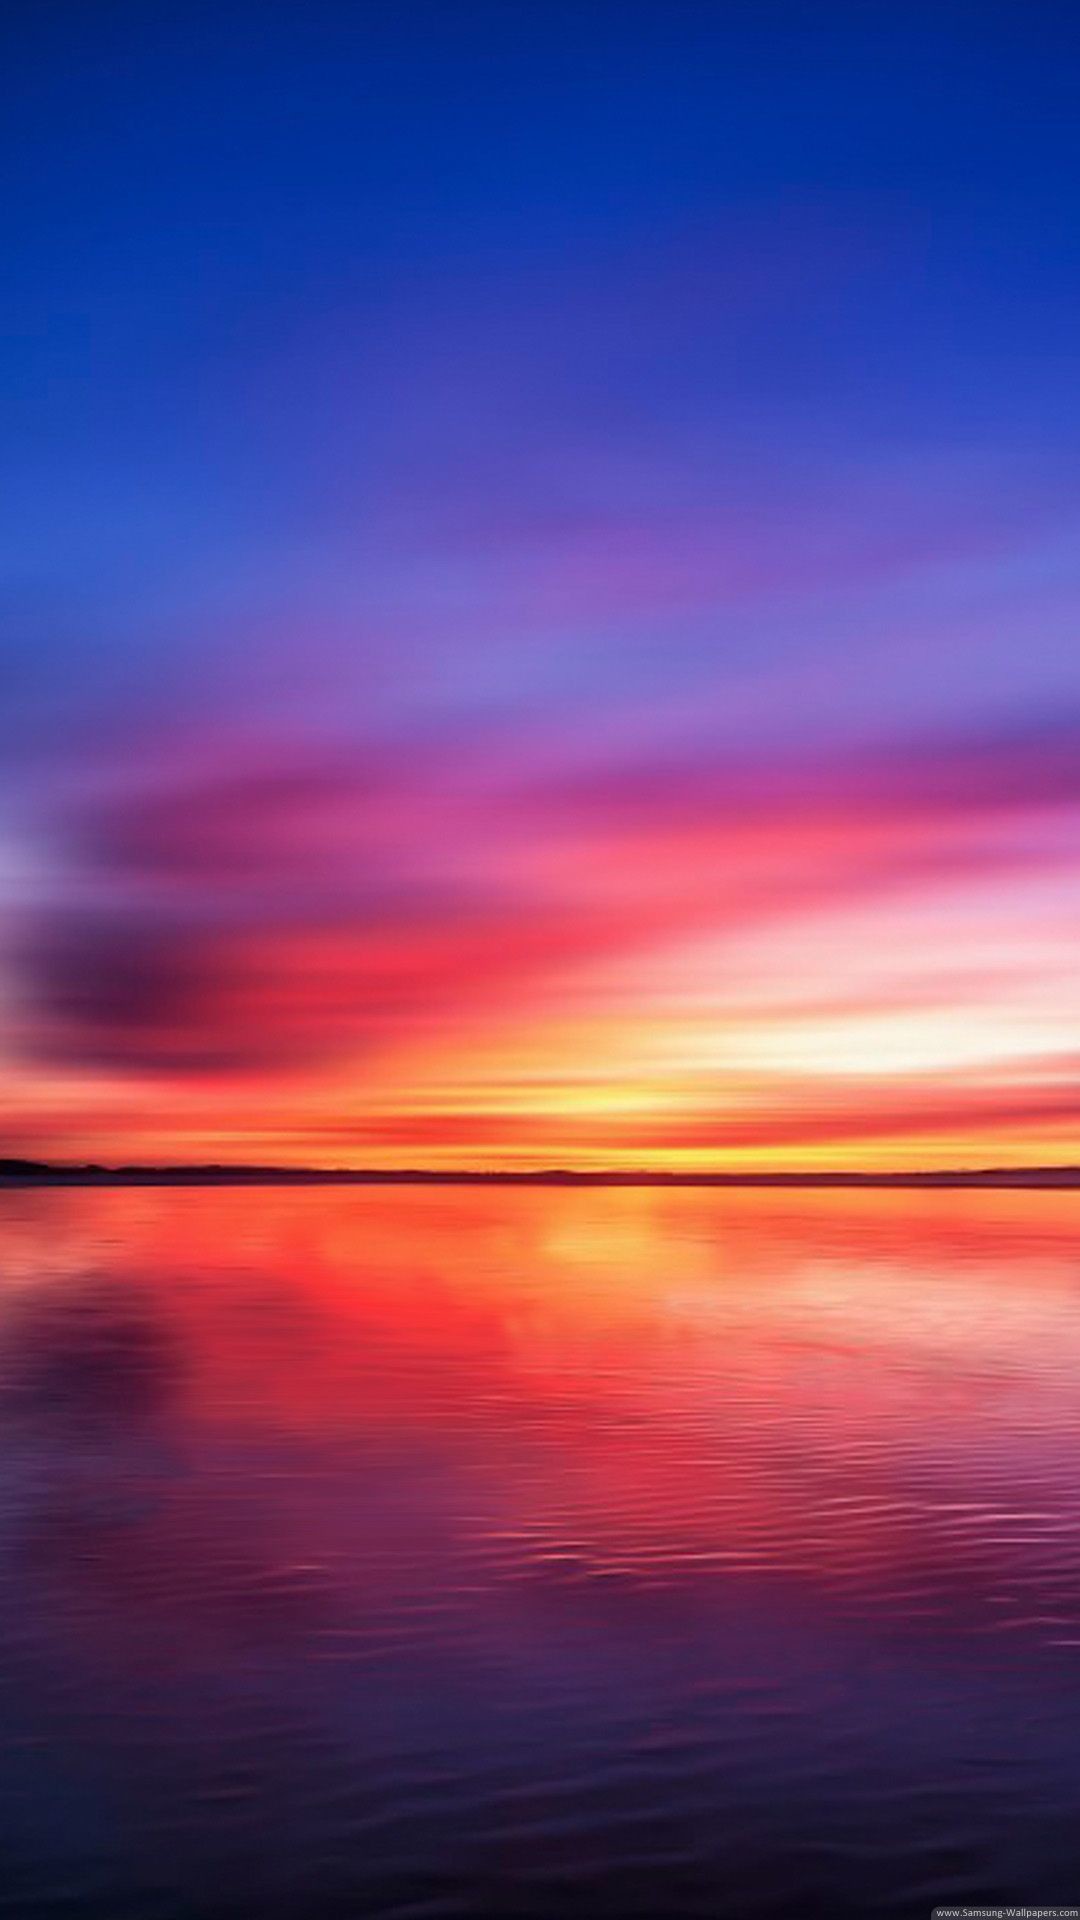 1080x1920 Fantasy Ocean Sunset Landscape iPhone s Wallpaper aleatÃ³rio